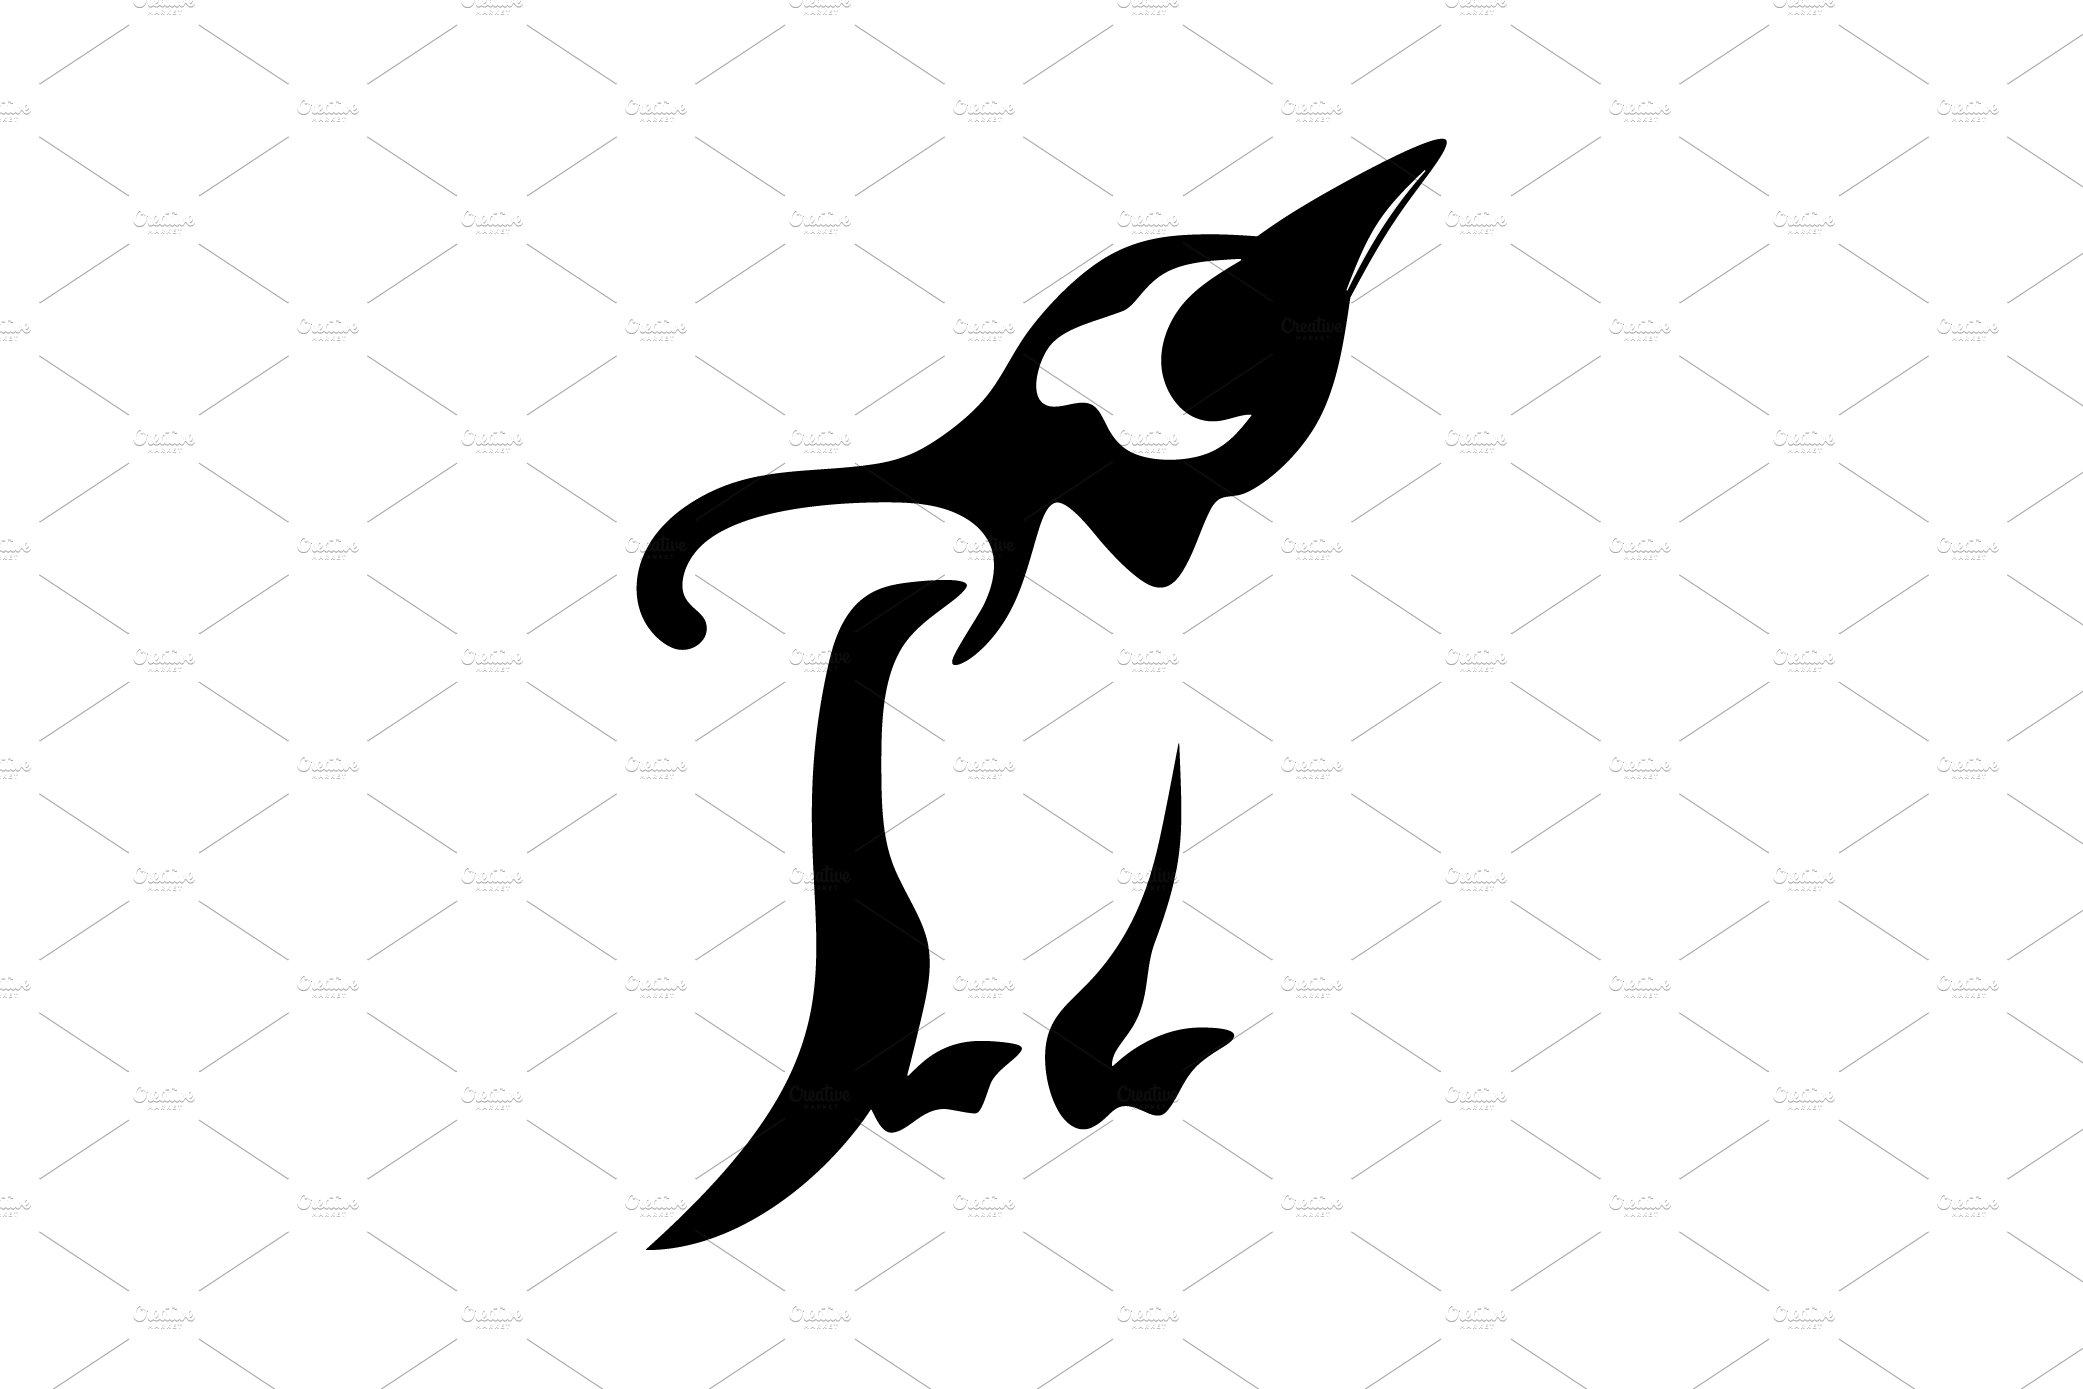 Penguin Logo Template Design cover image.